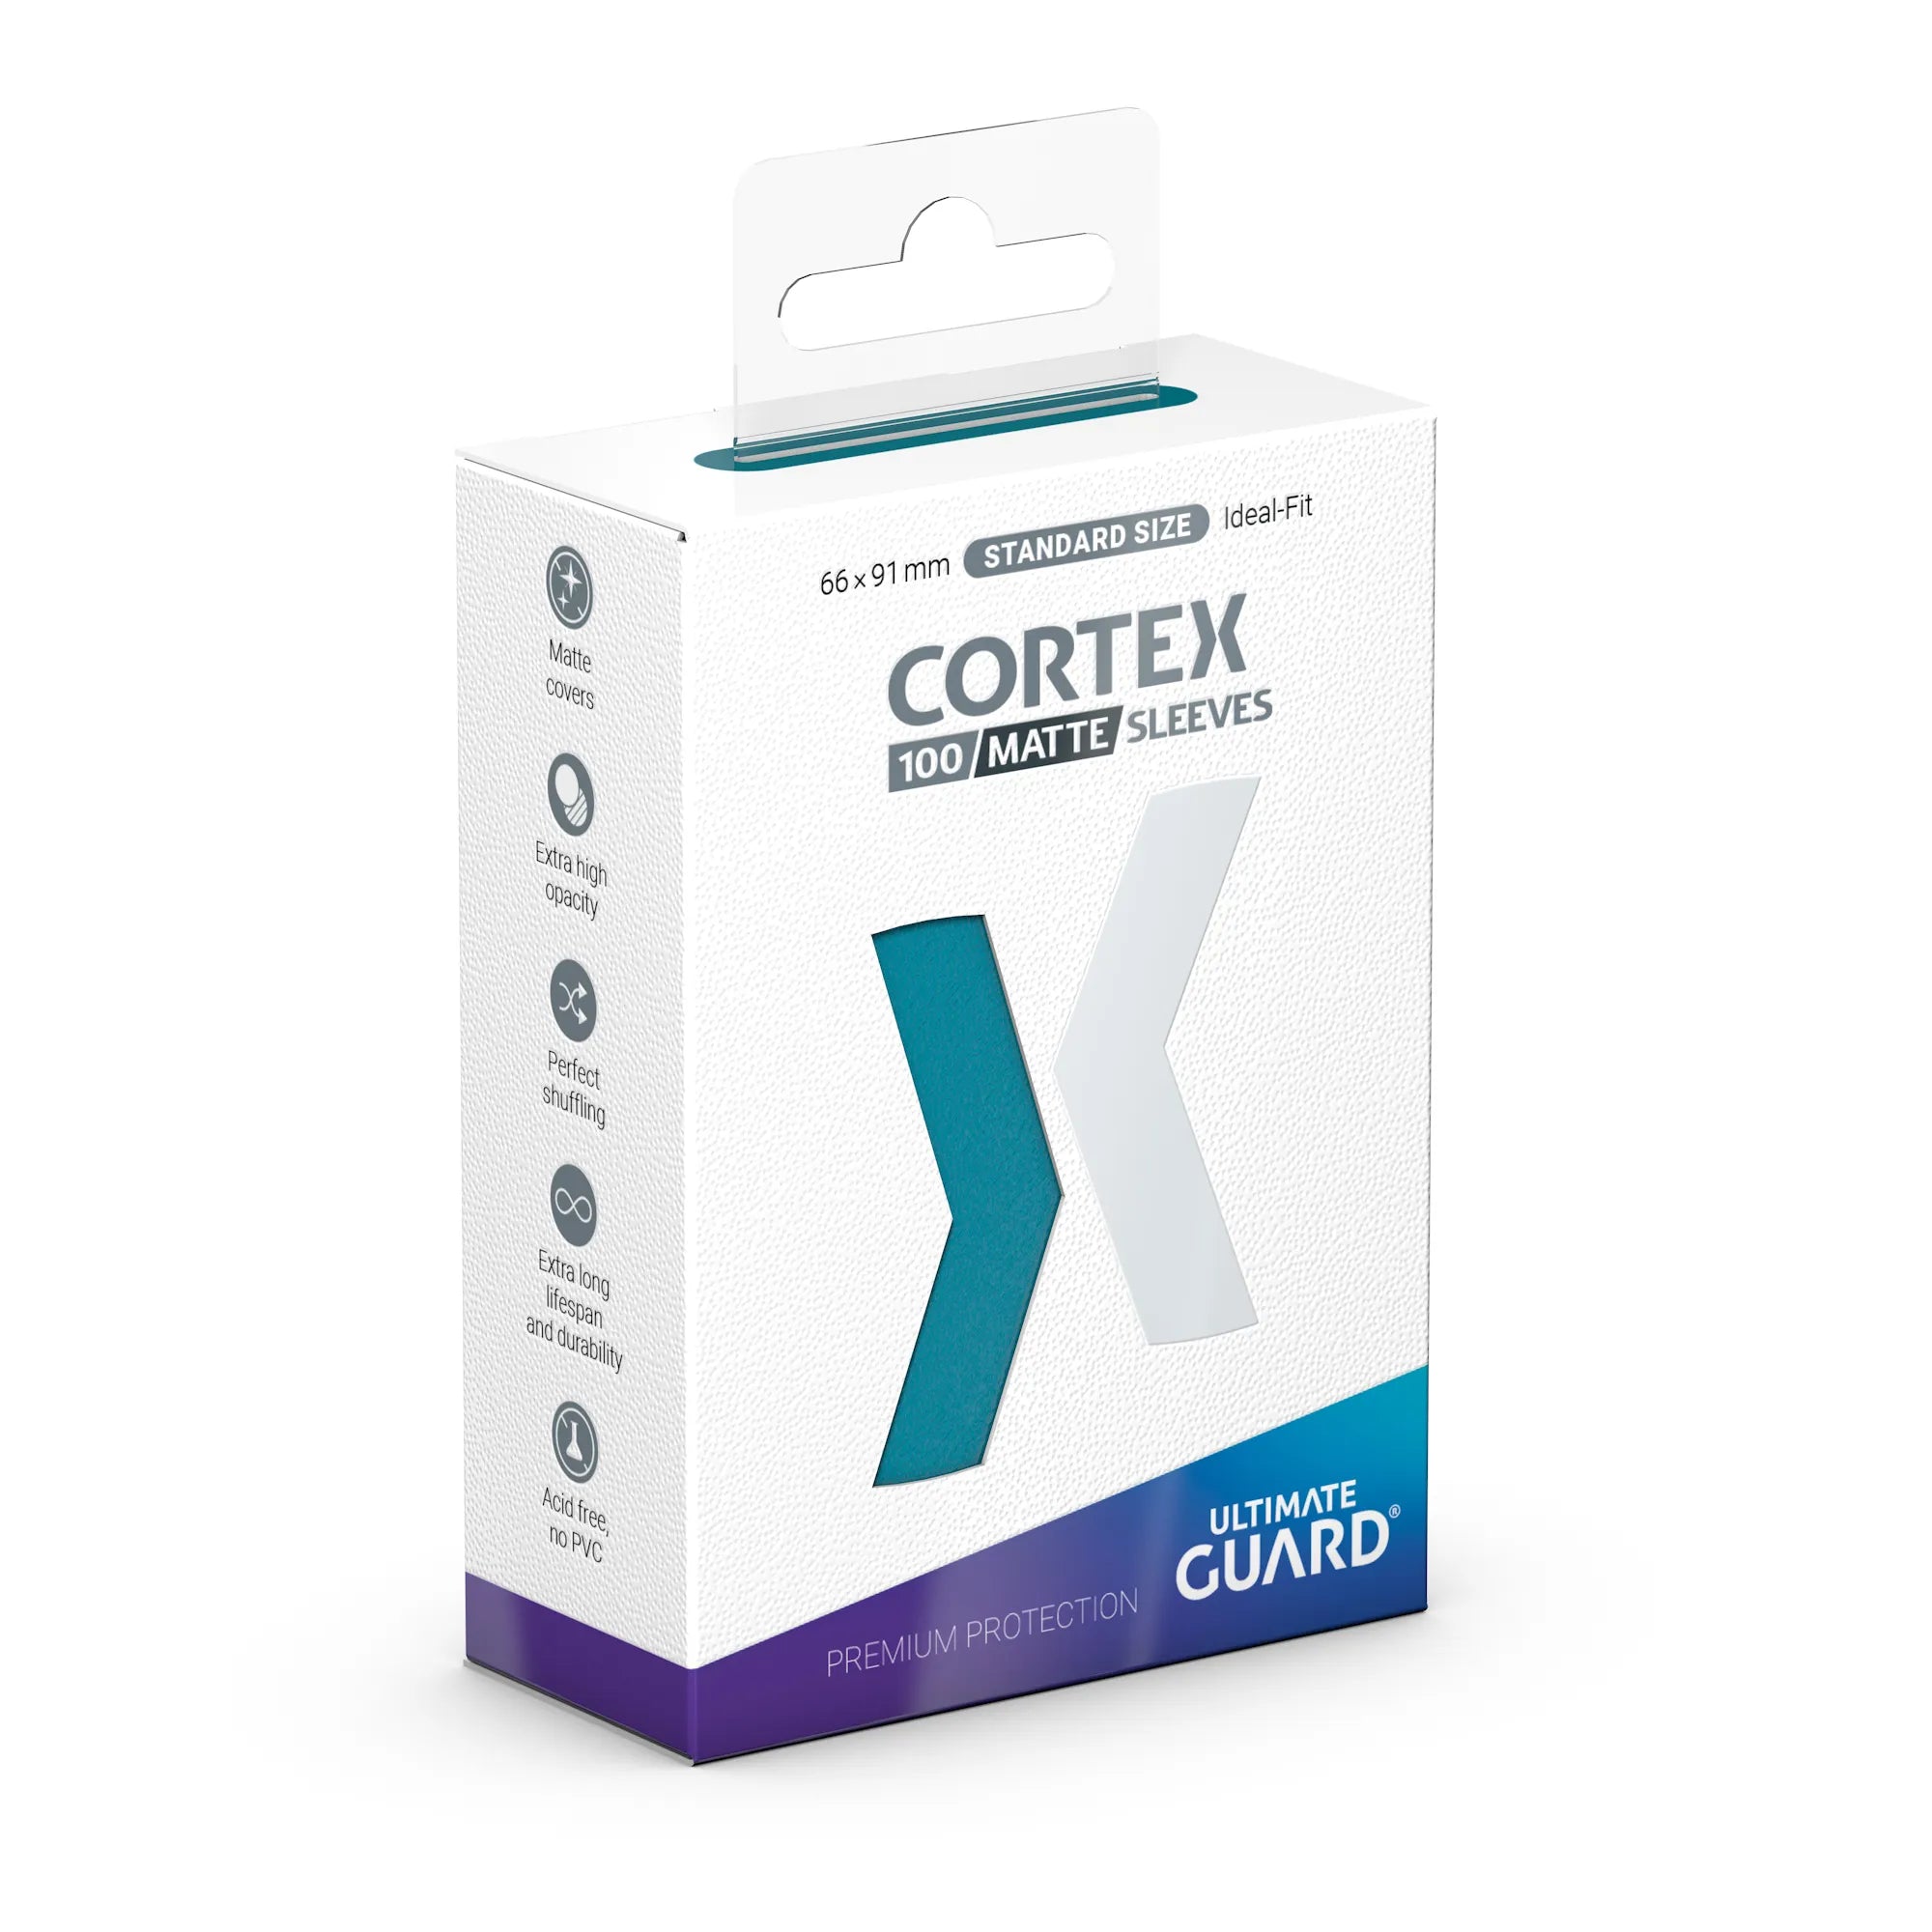 Cortex UG Sleeves Standard Size 100-ct (Matte Petrol)